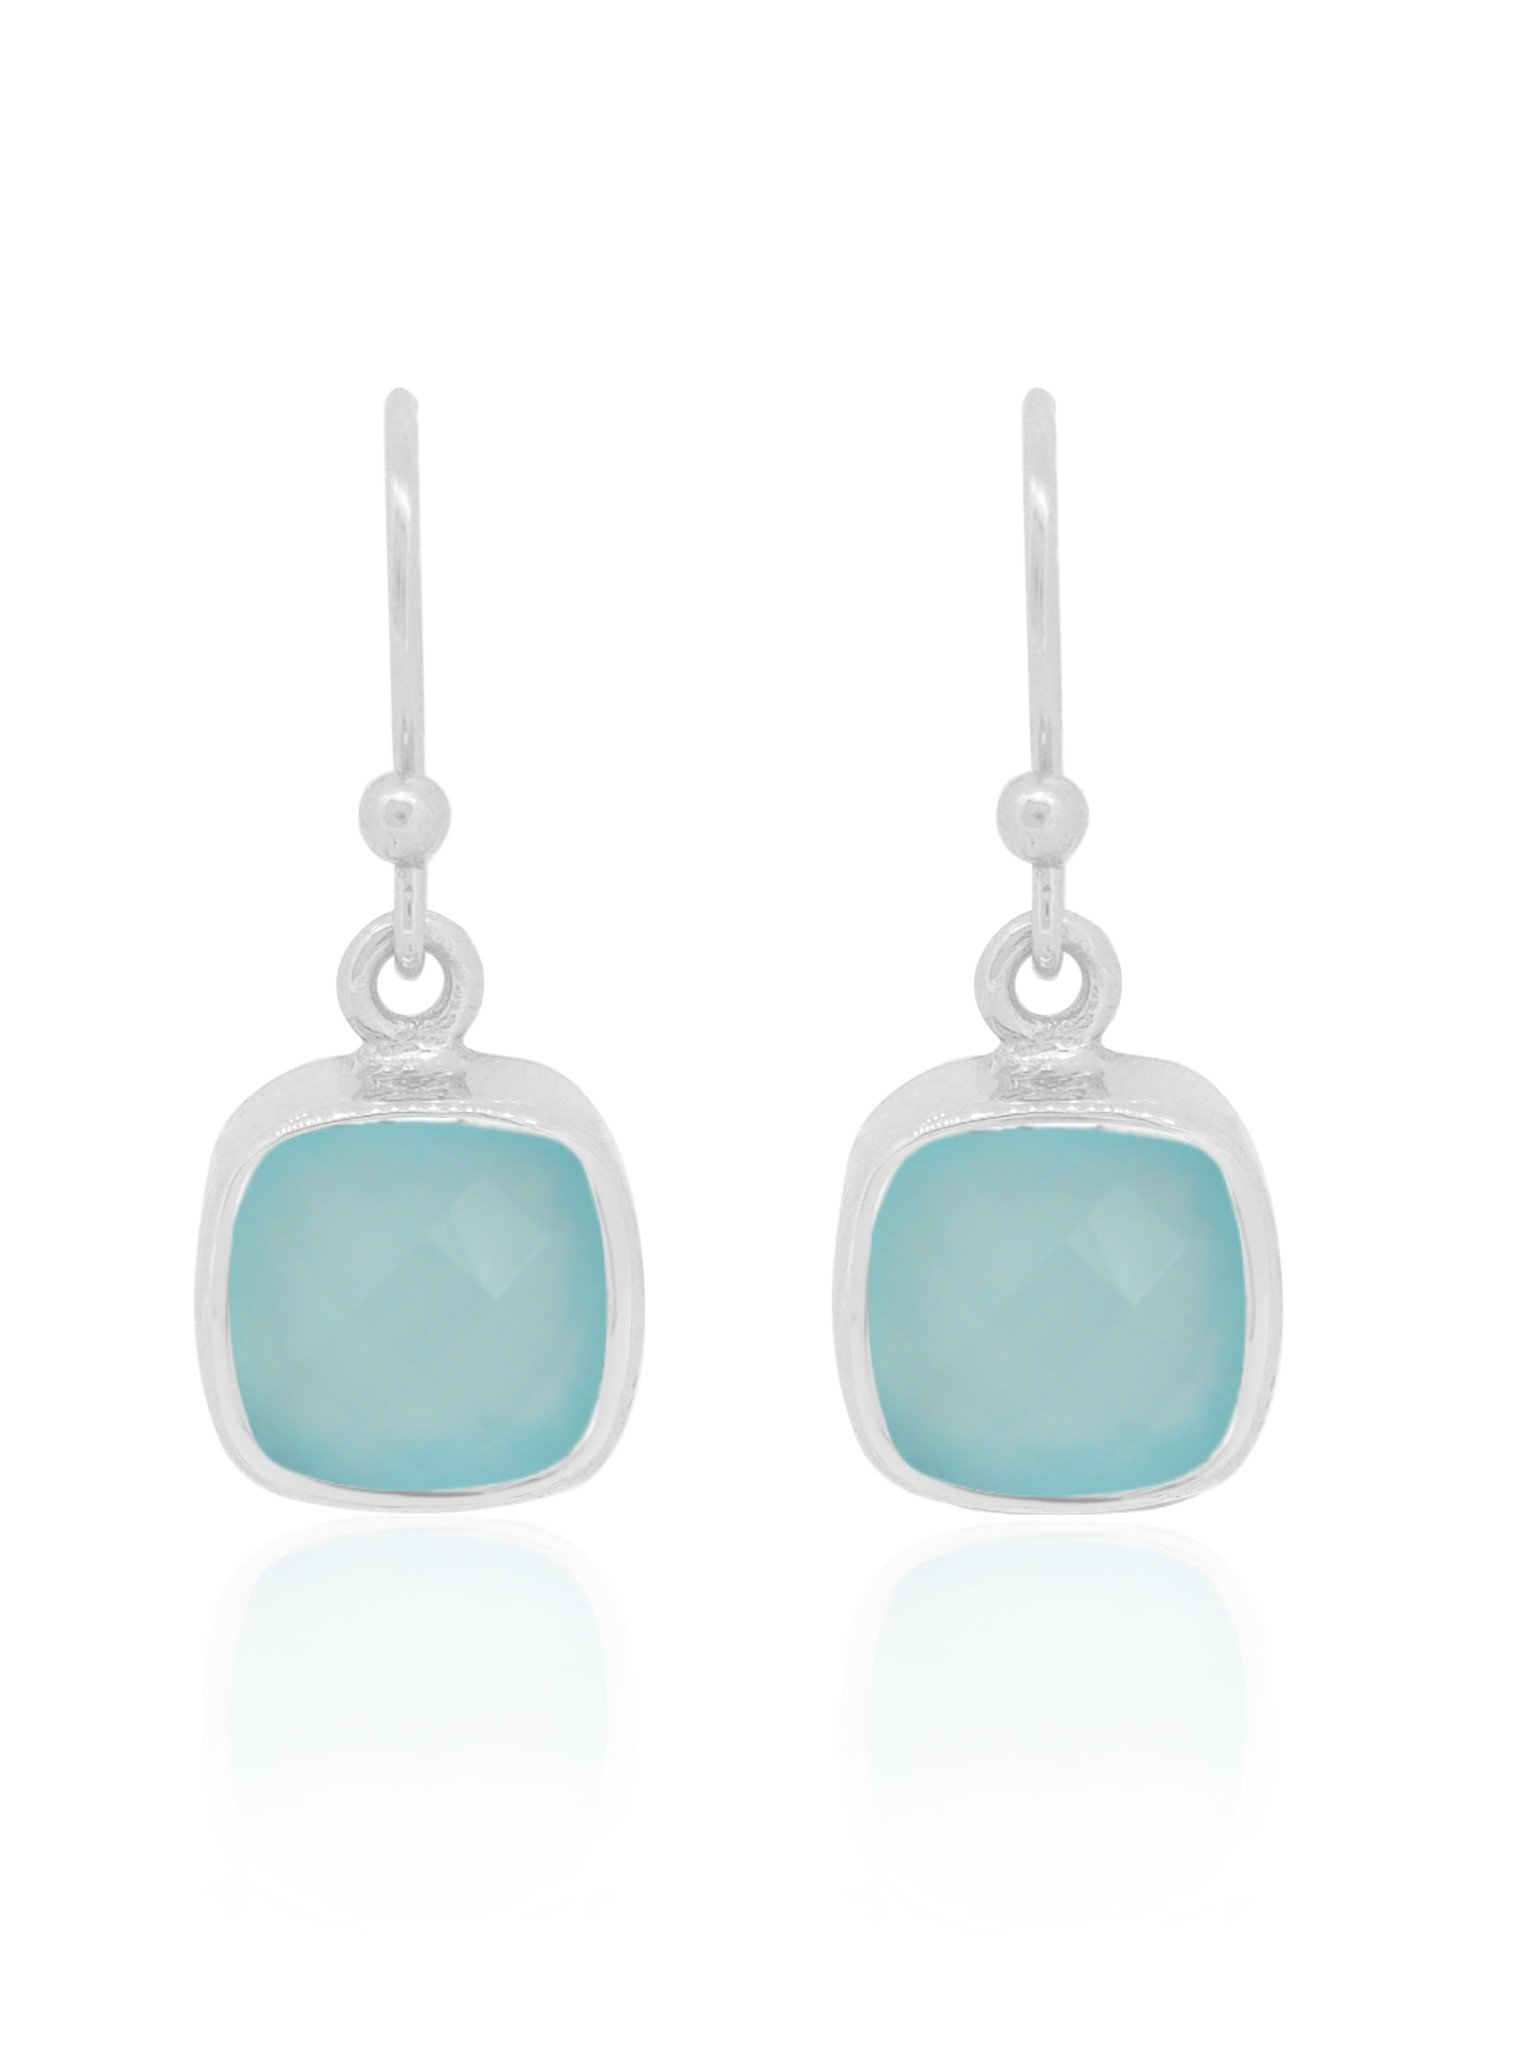 cluster earrings Aqua blue chalcedony teardrop and apatite gemstones cluster earrings in sterling silver 925 Jewellery Earrings Cluster Earrings 